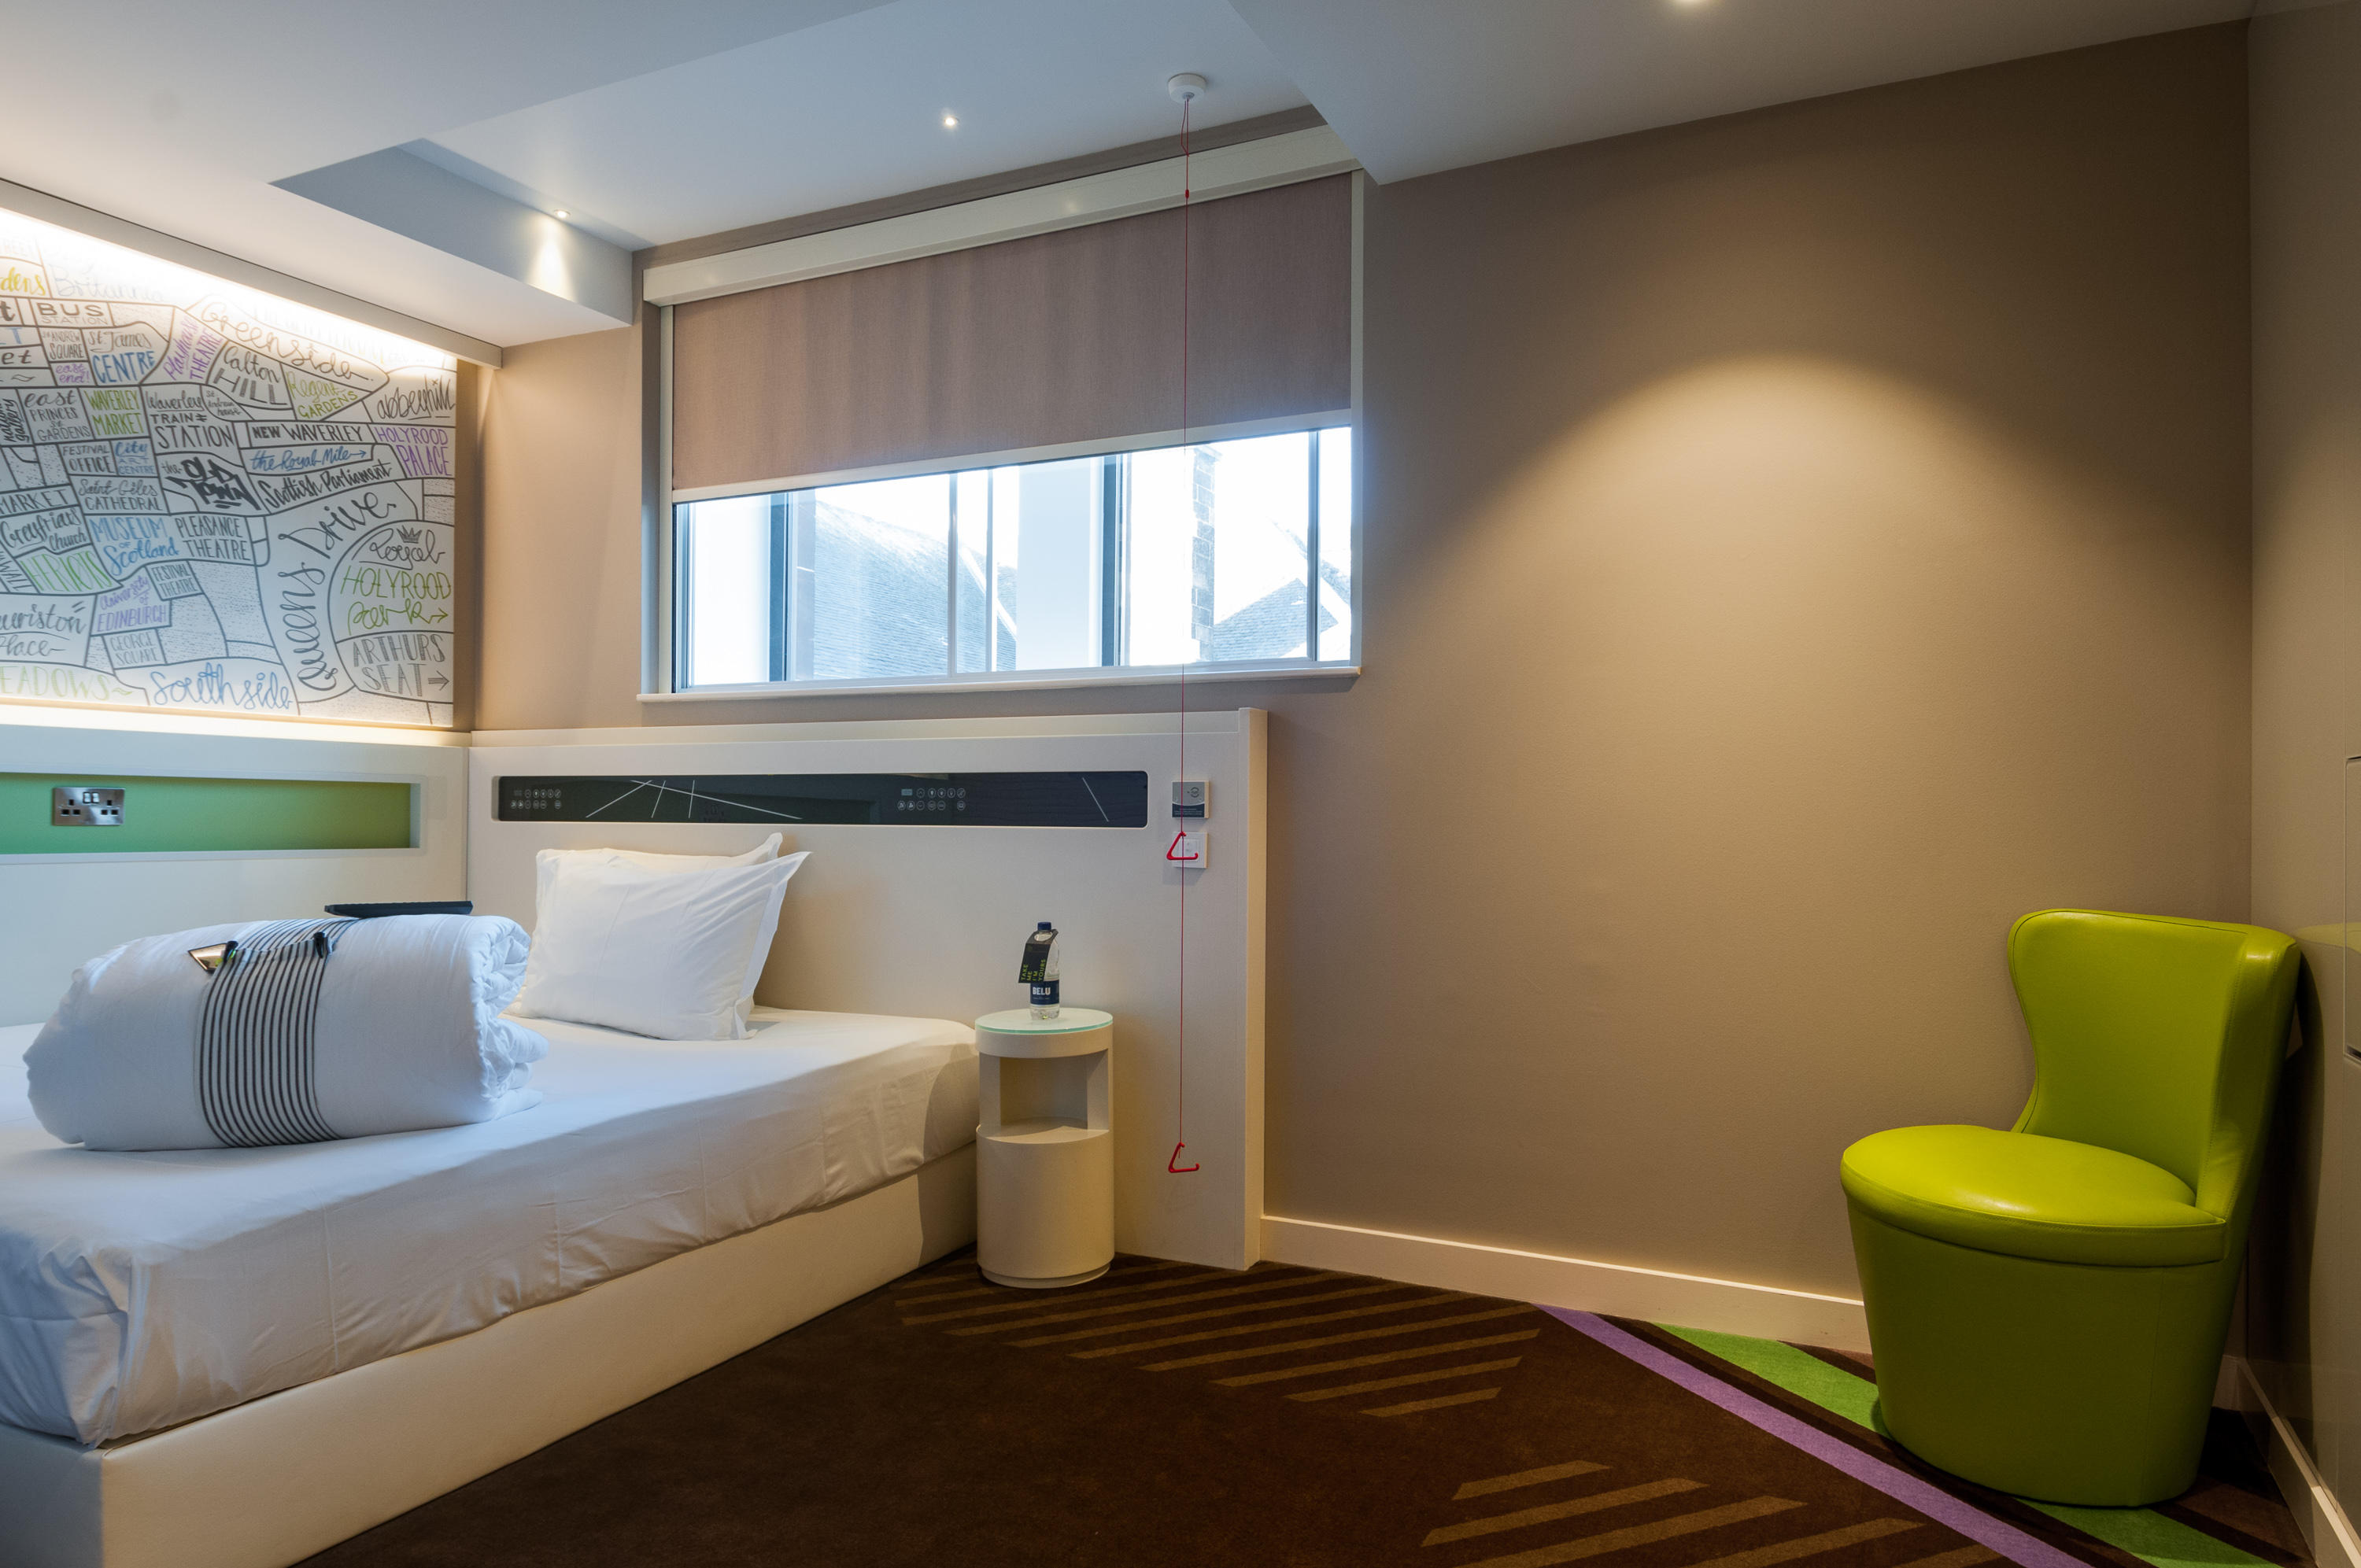 hub by Premier Inn accessible room hub by Premier Inn London Covent Garden hotel London 03333 213104